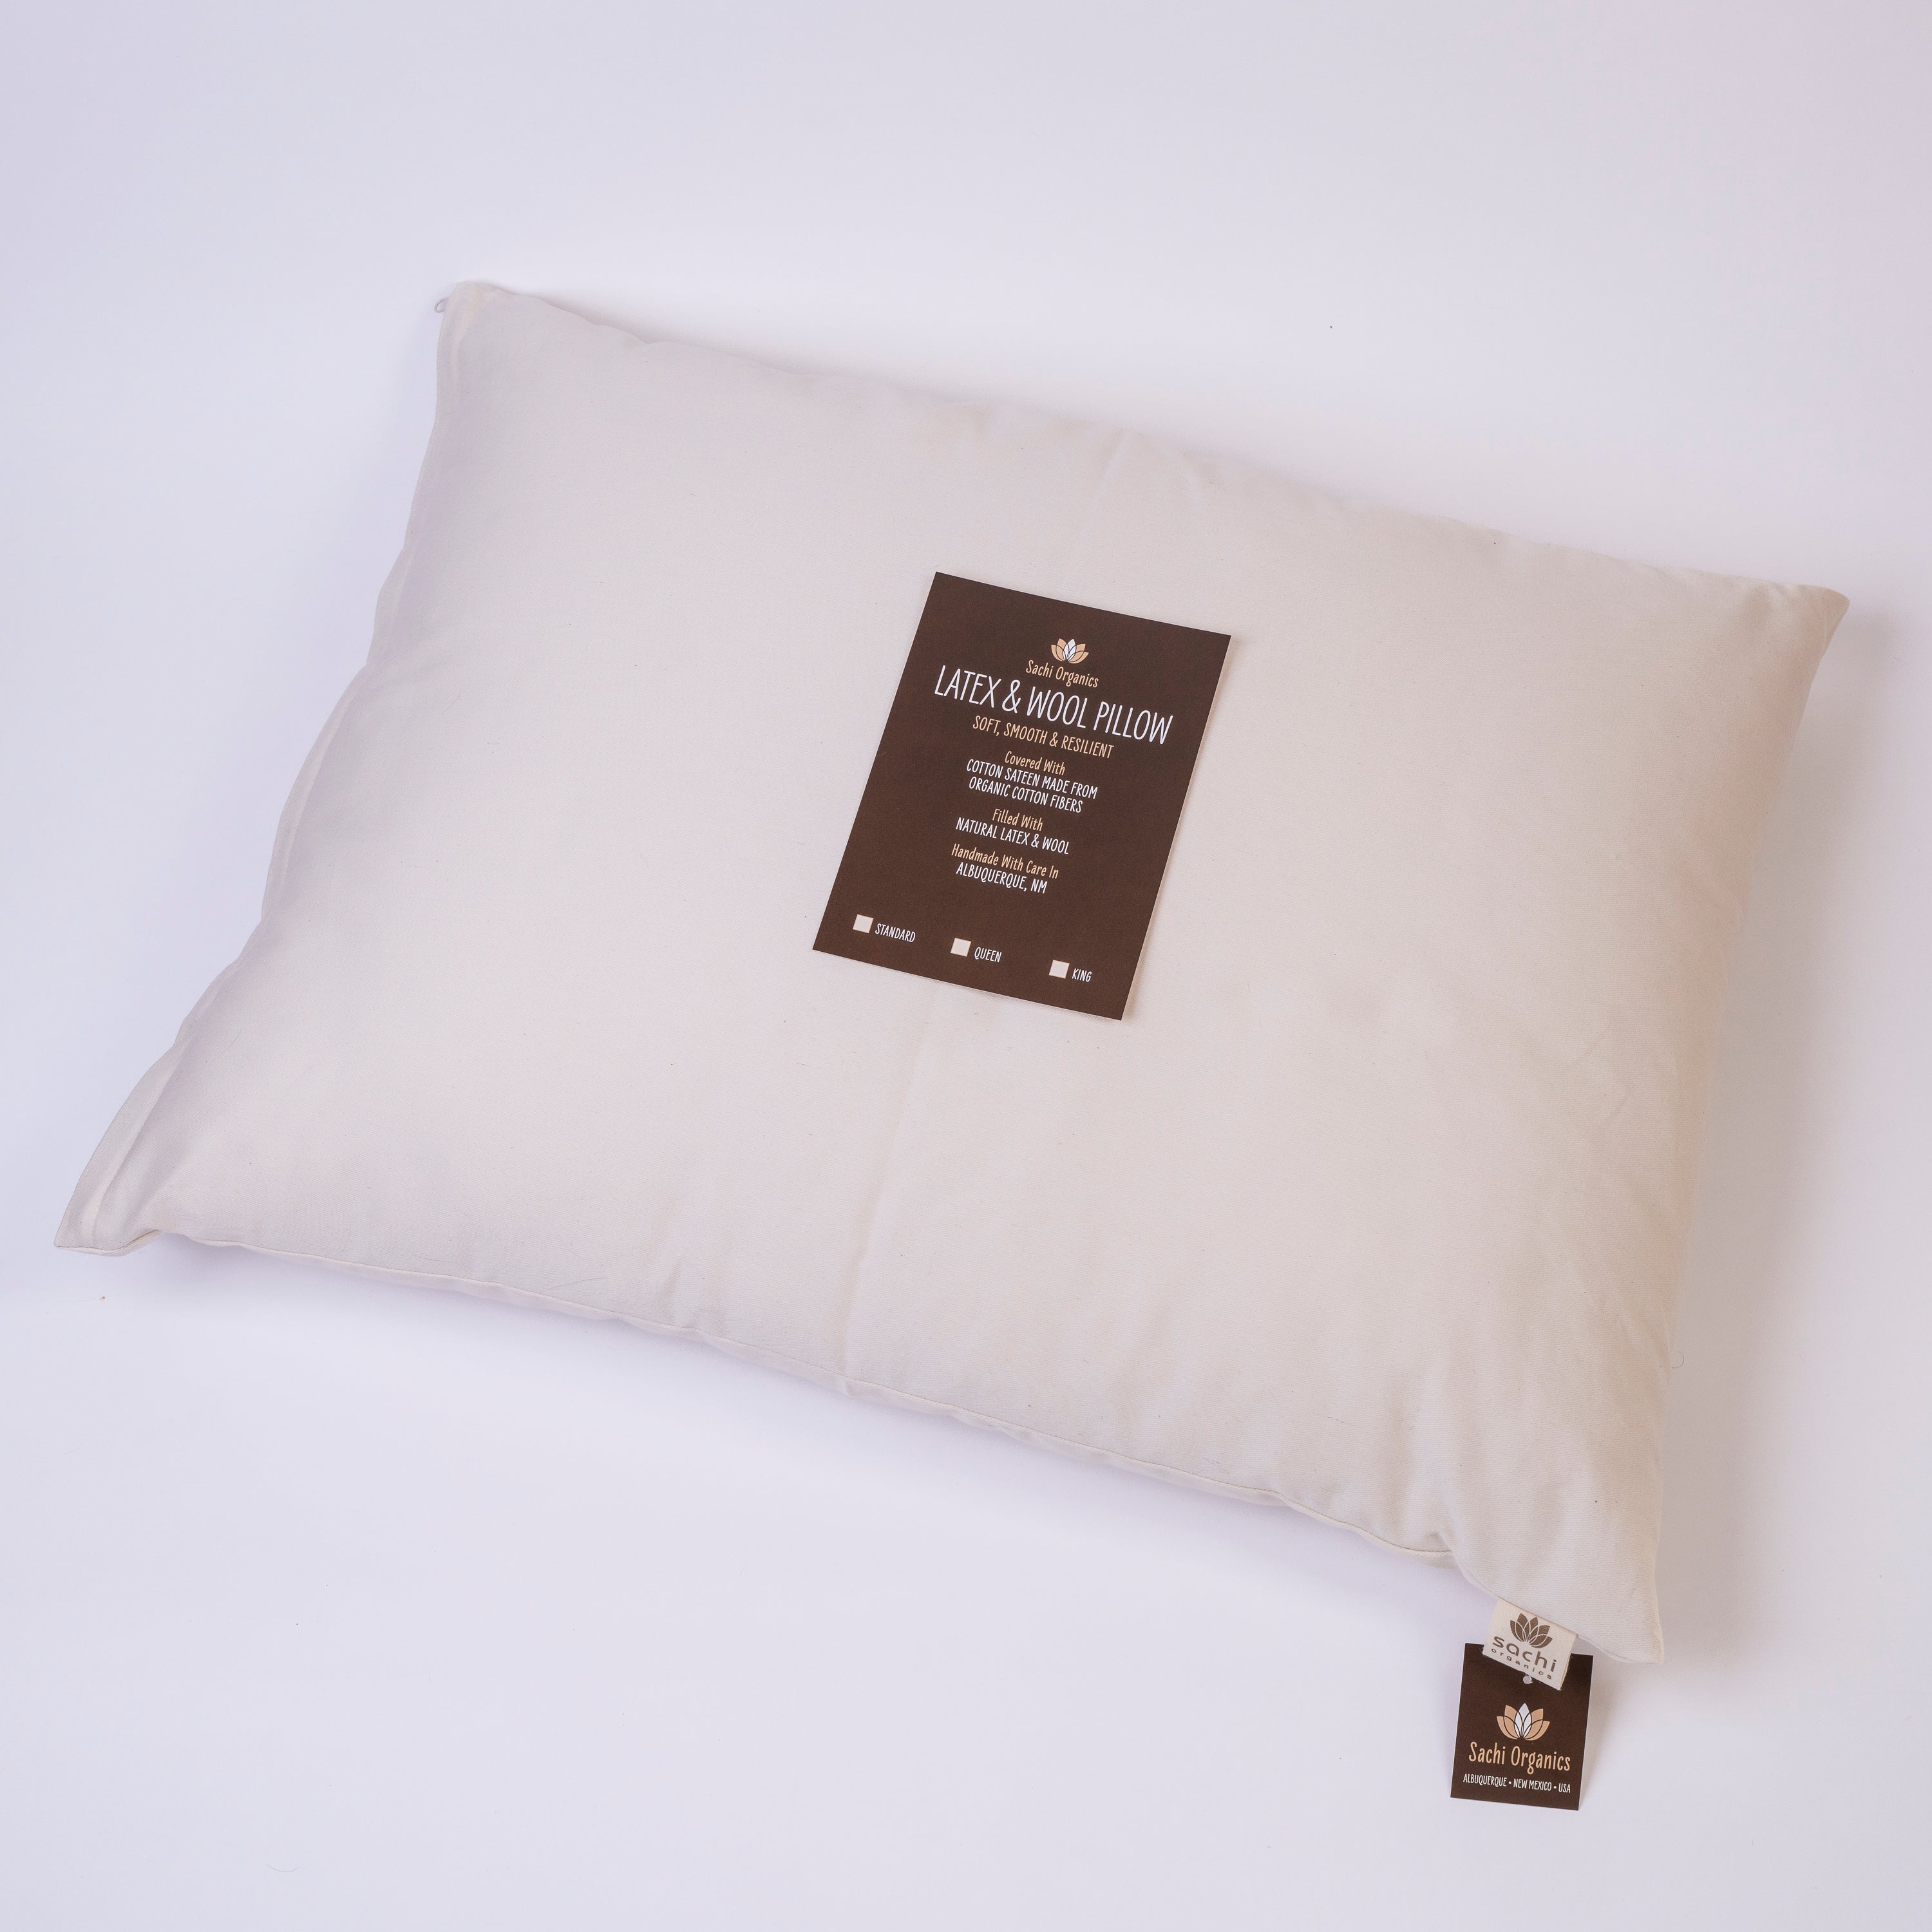 Latex & Wool Pillow